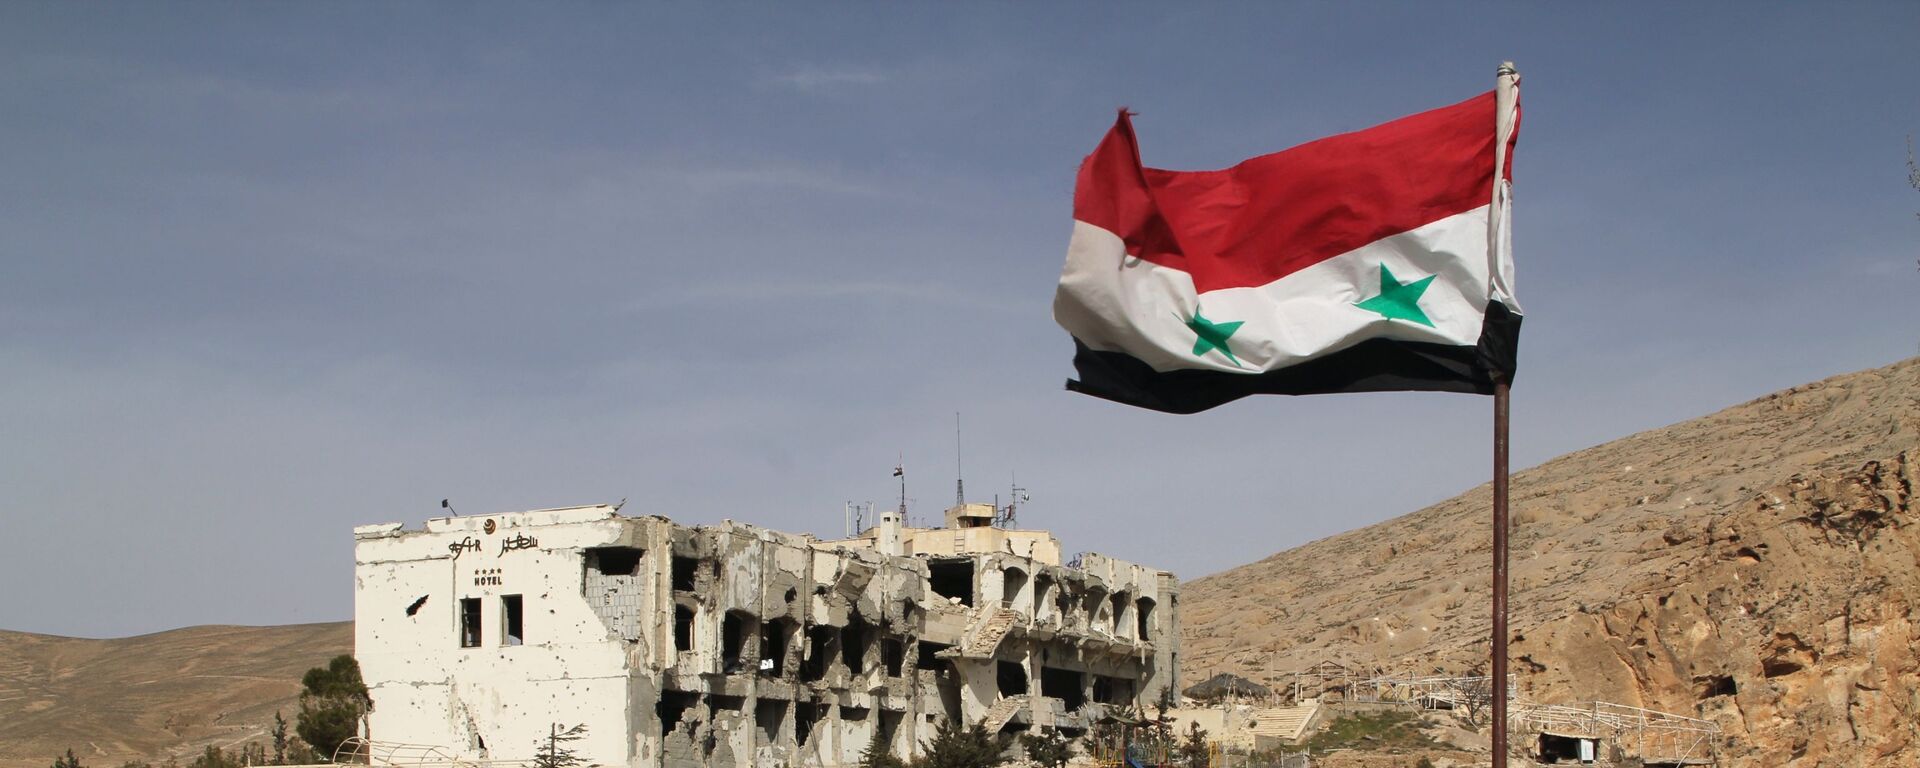 Сирийский флаг на фоне разрушенного дома в сирийском городе Маалюля - Sputnik Таджикистан, 1920, 26.02.2021